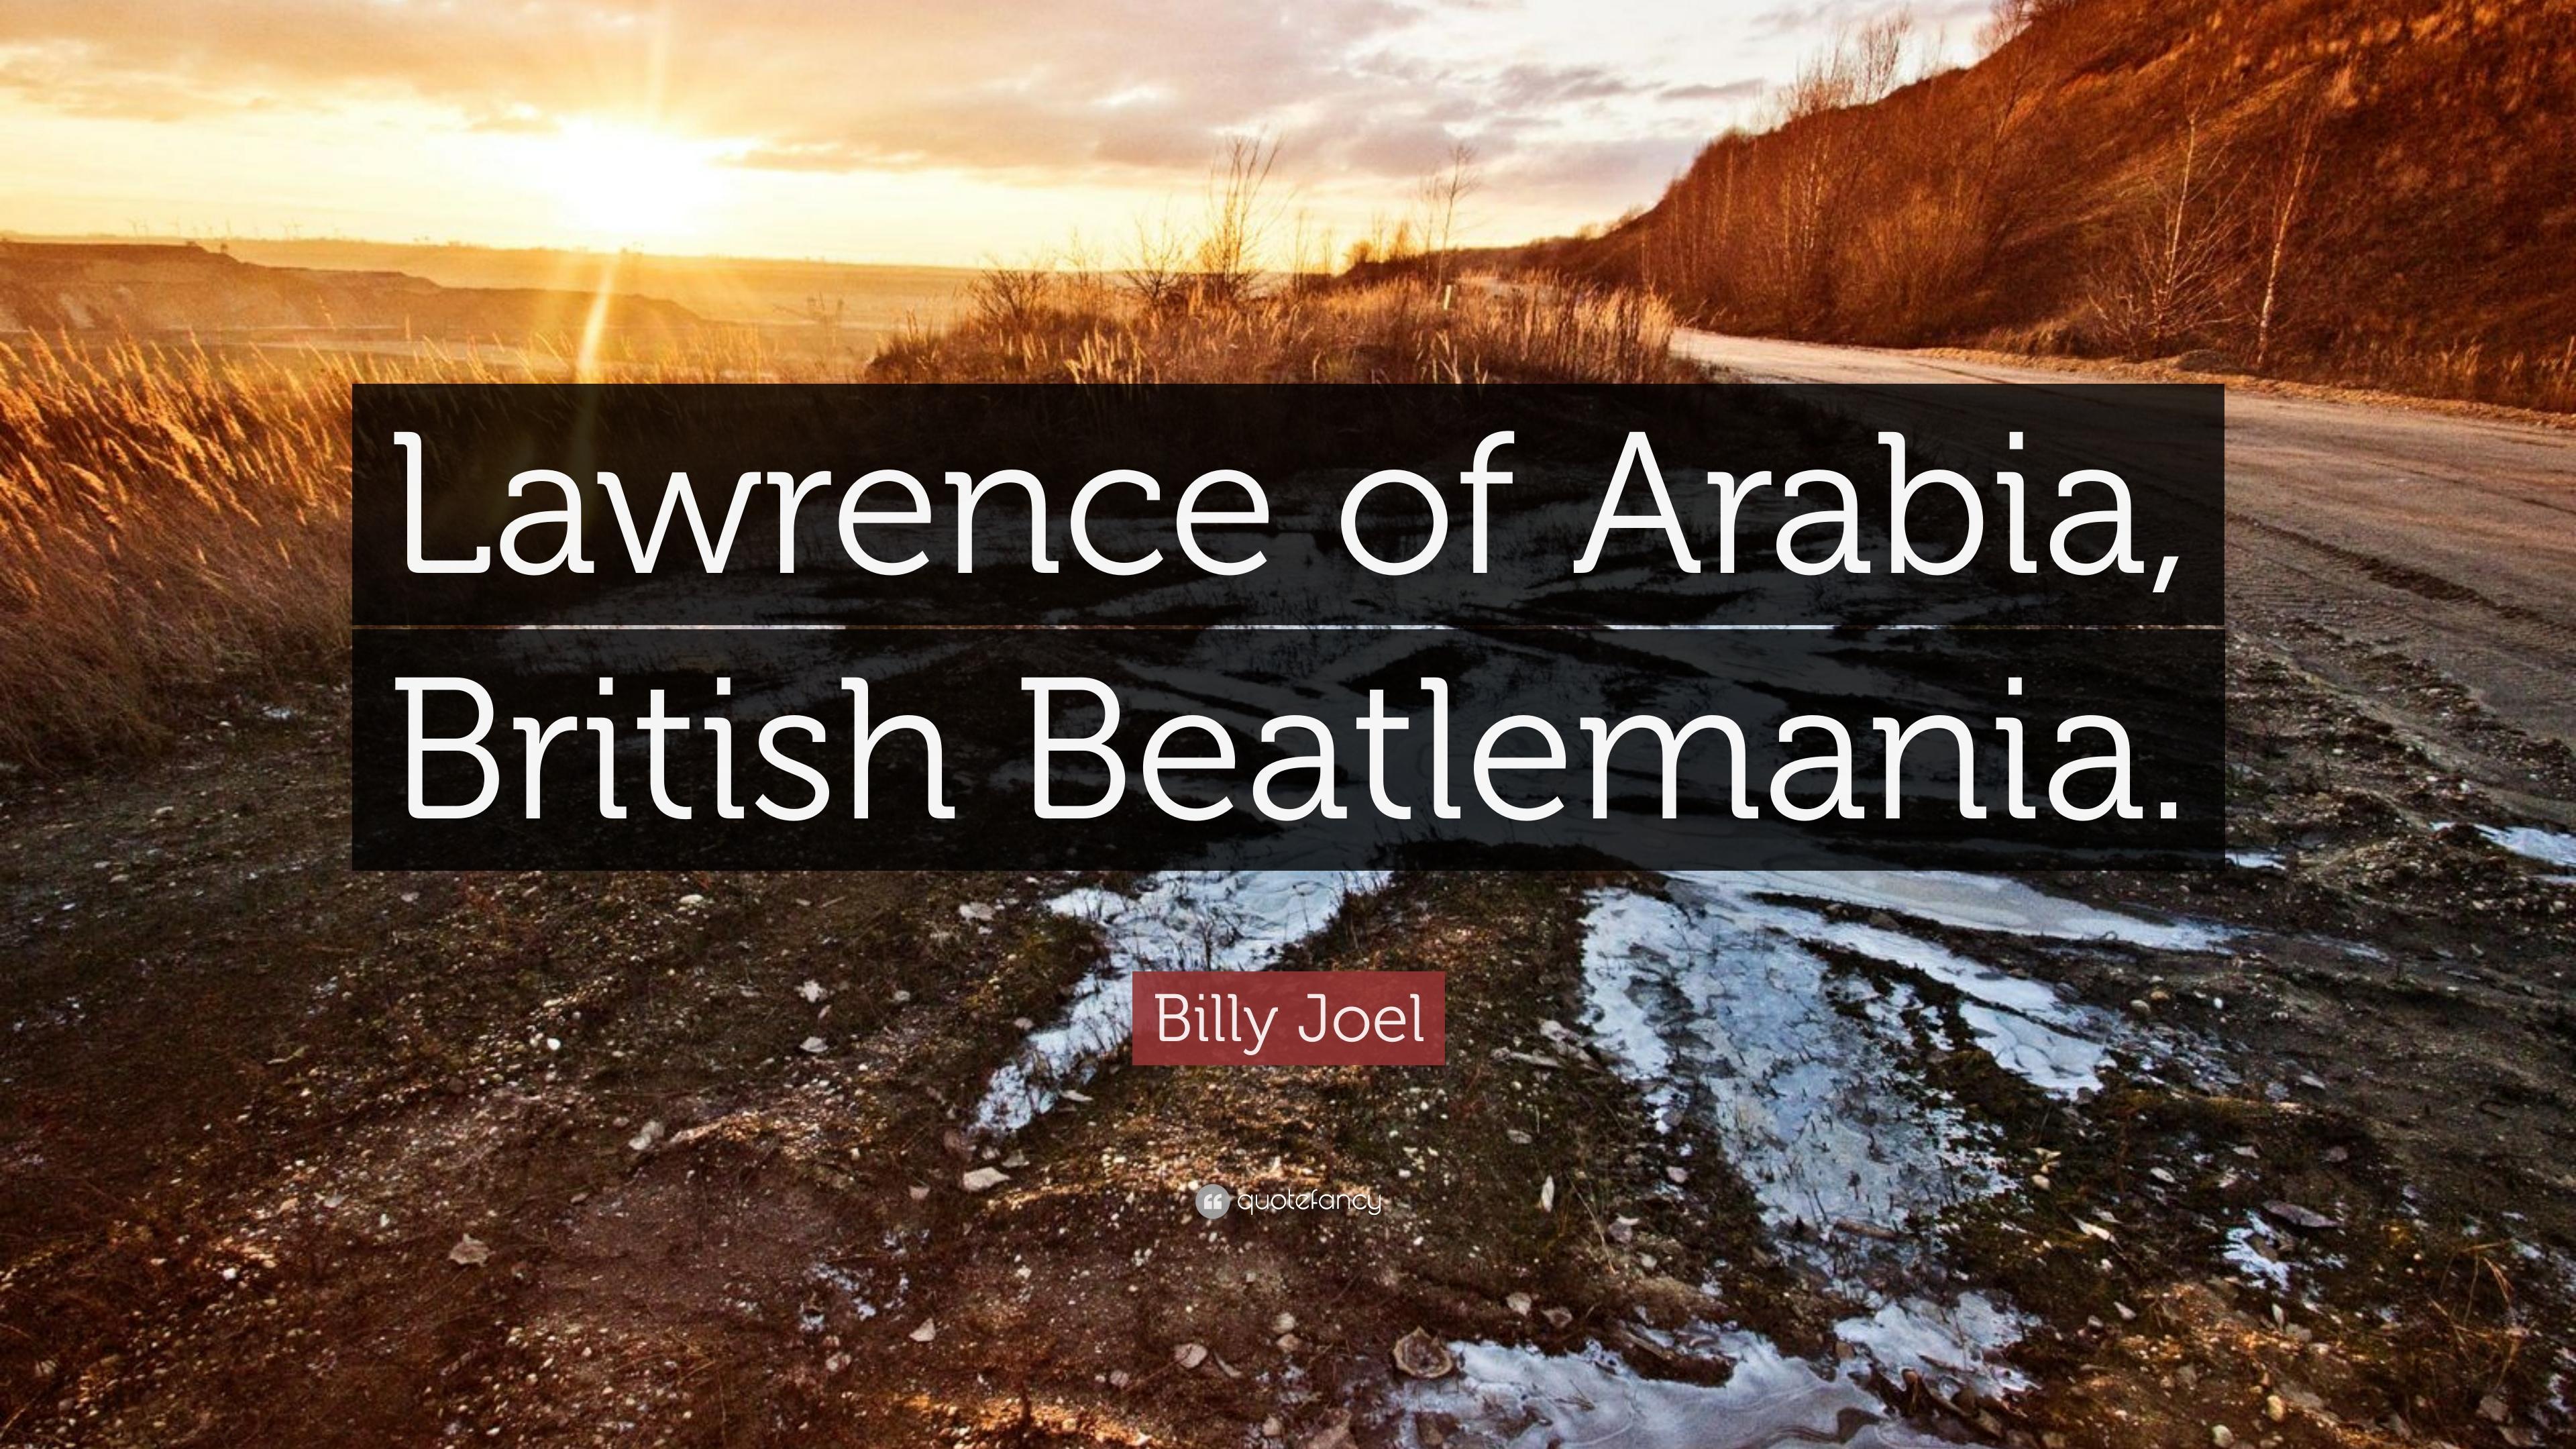 Billy Joel Quote: “Lawrence of Arabia, British Beatlemania.” 7